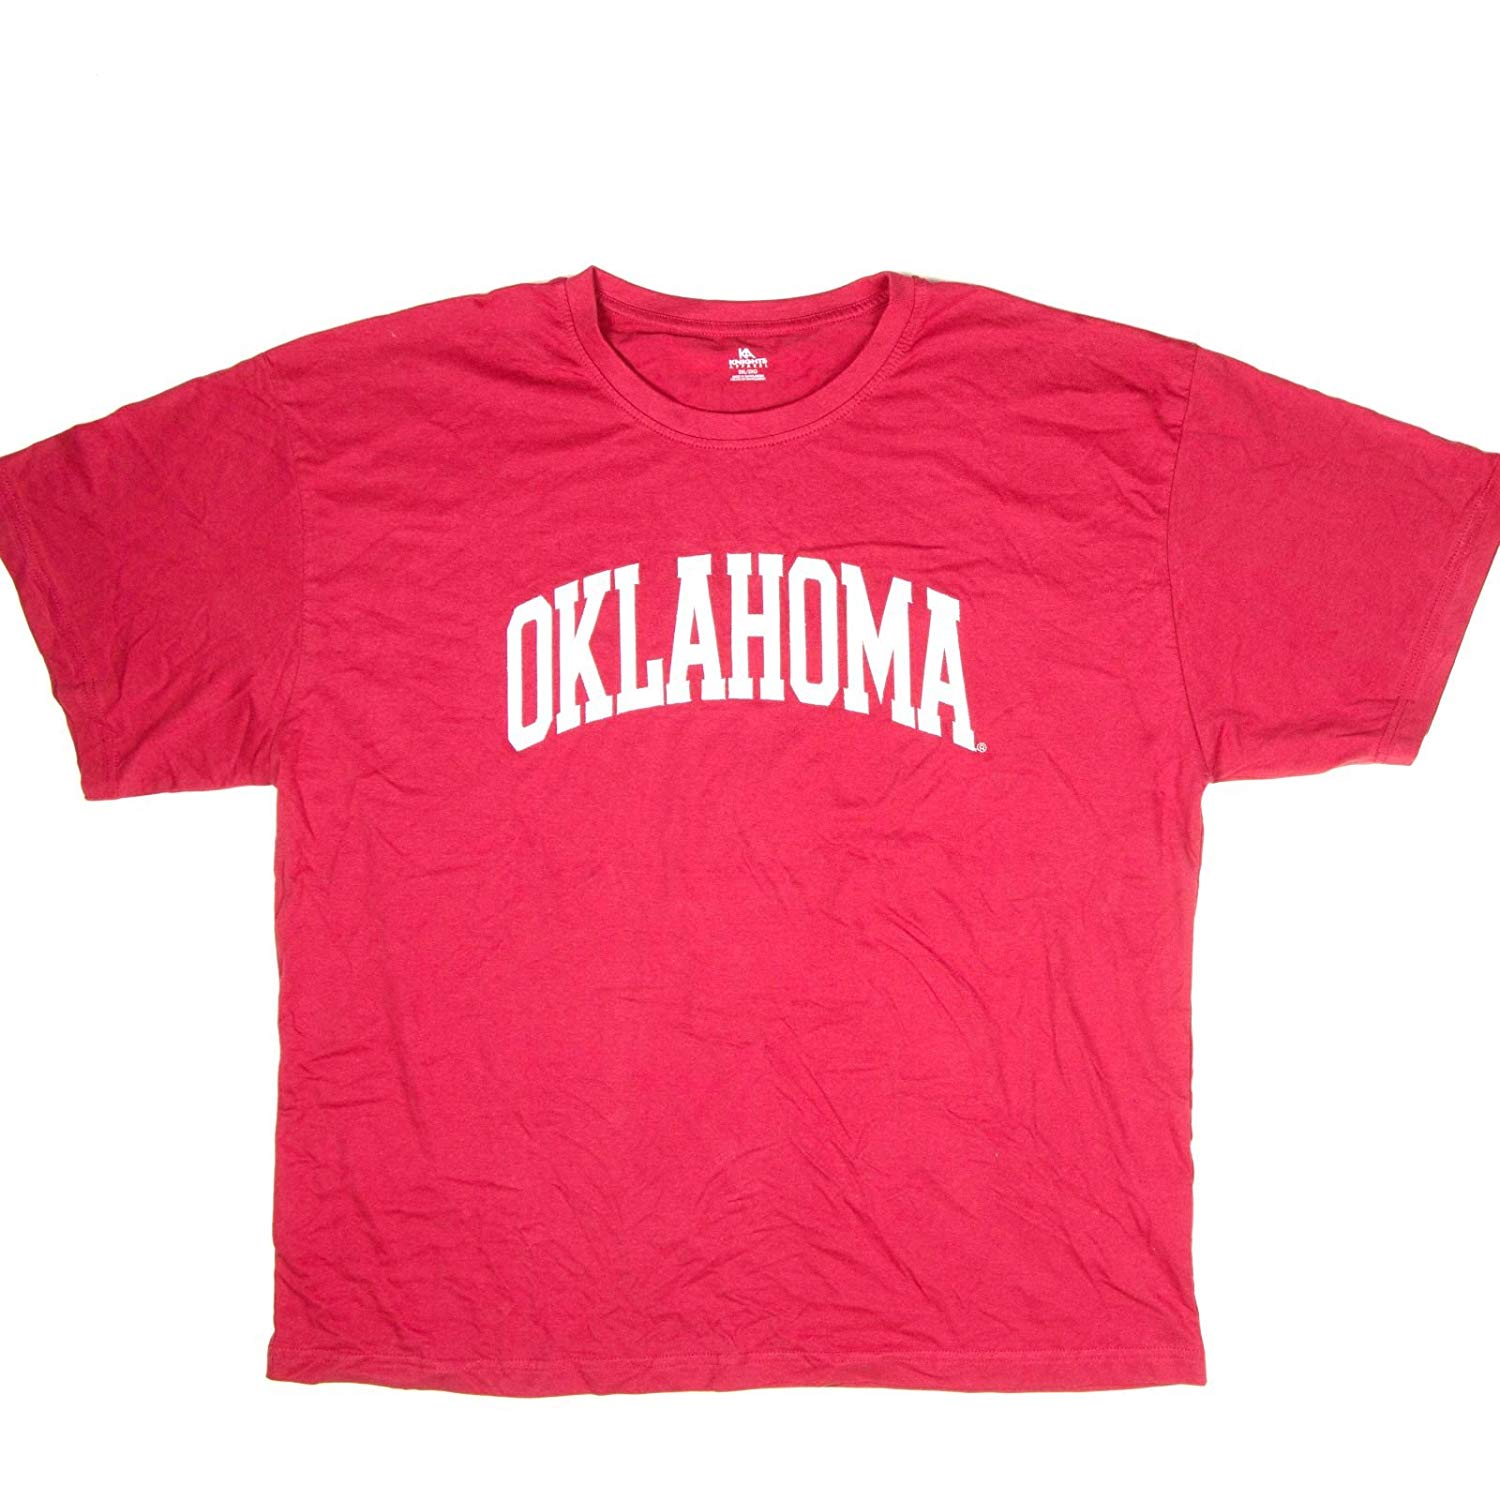 Red Apparel Logo - Amazon.com: Knights Apparel Mens Oklahoma University OU Logo Graphic ...